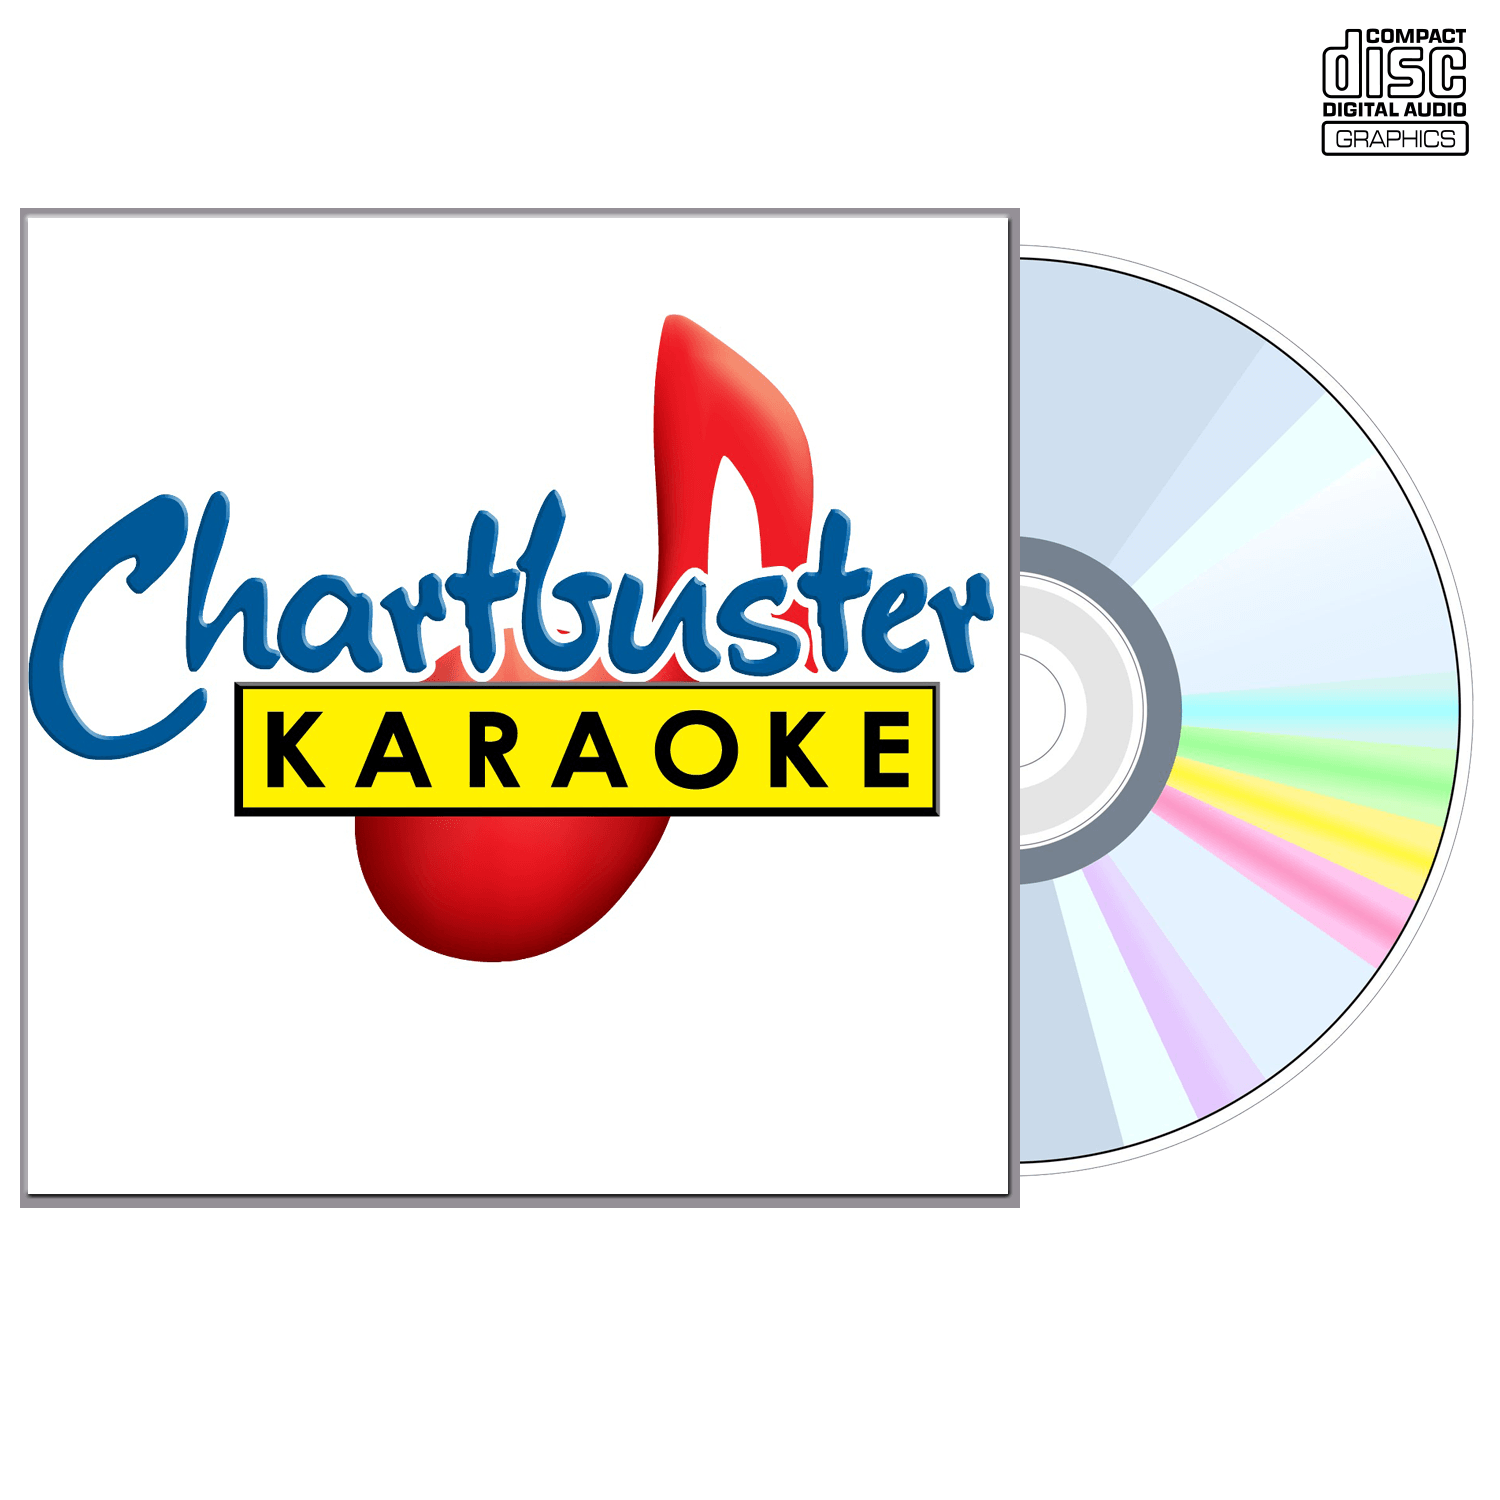 Ultimate 90's Collection V07 - CD+G - Chartbuster Karaoke - Karaoke Home Entertainment